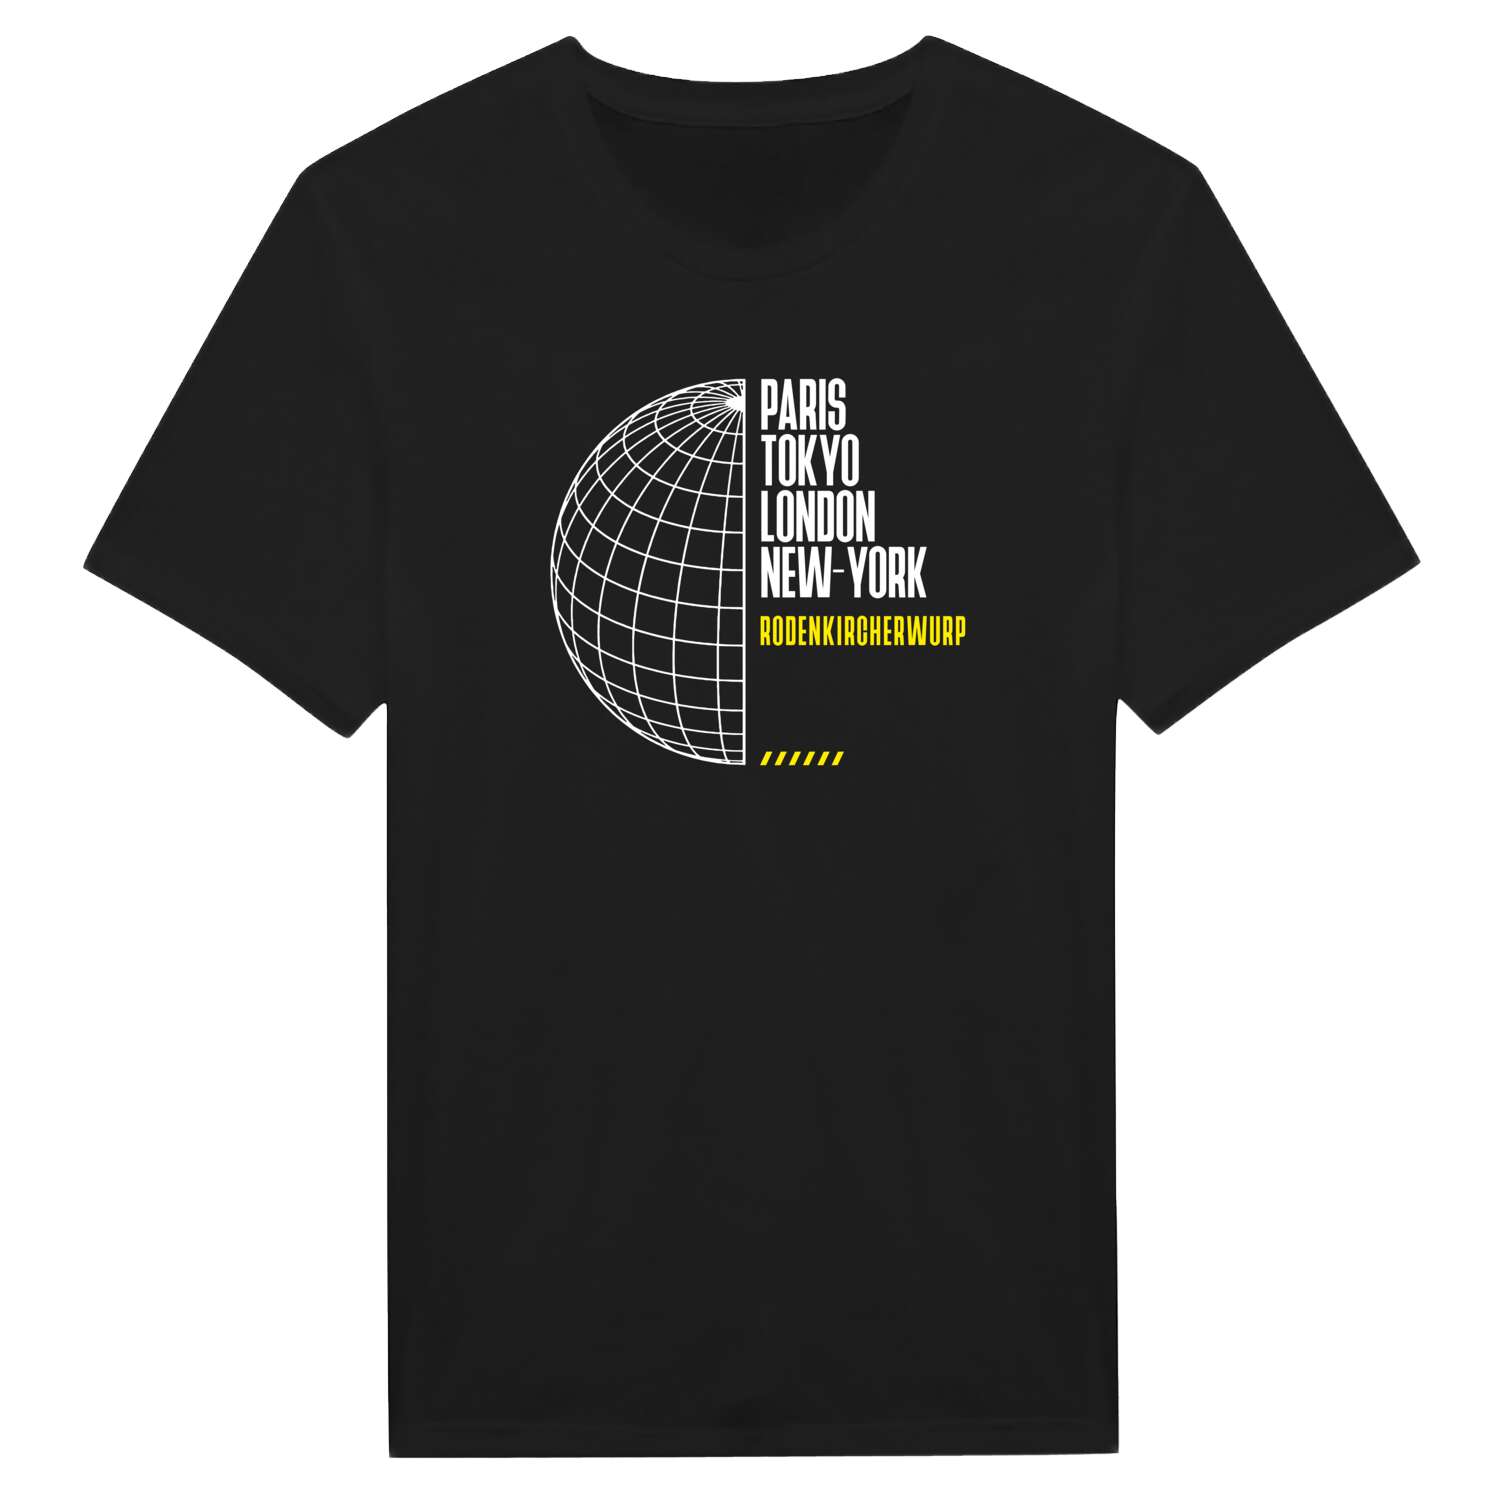 Rodenkircherwurp T-Shirt »Paris Tokyo London«